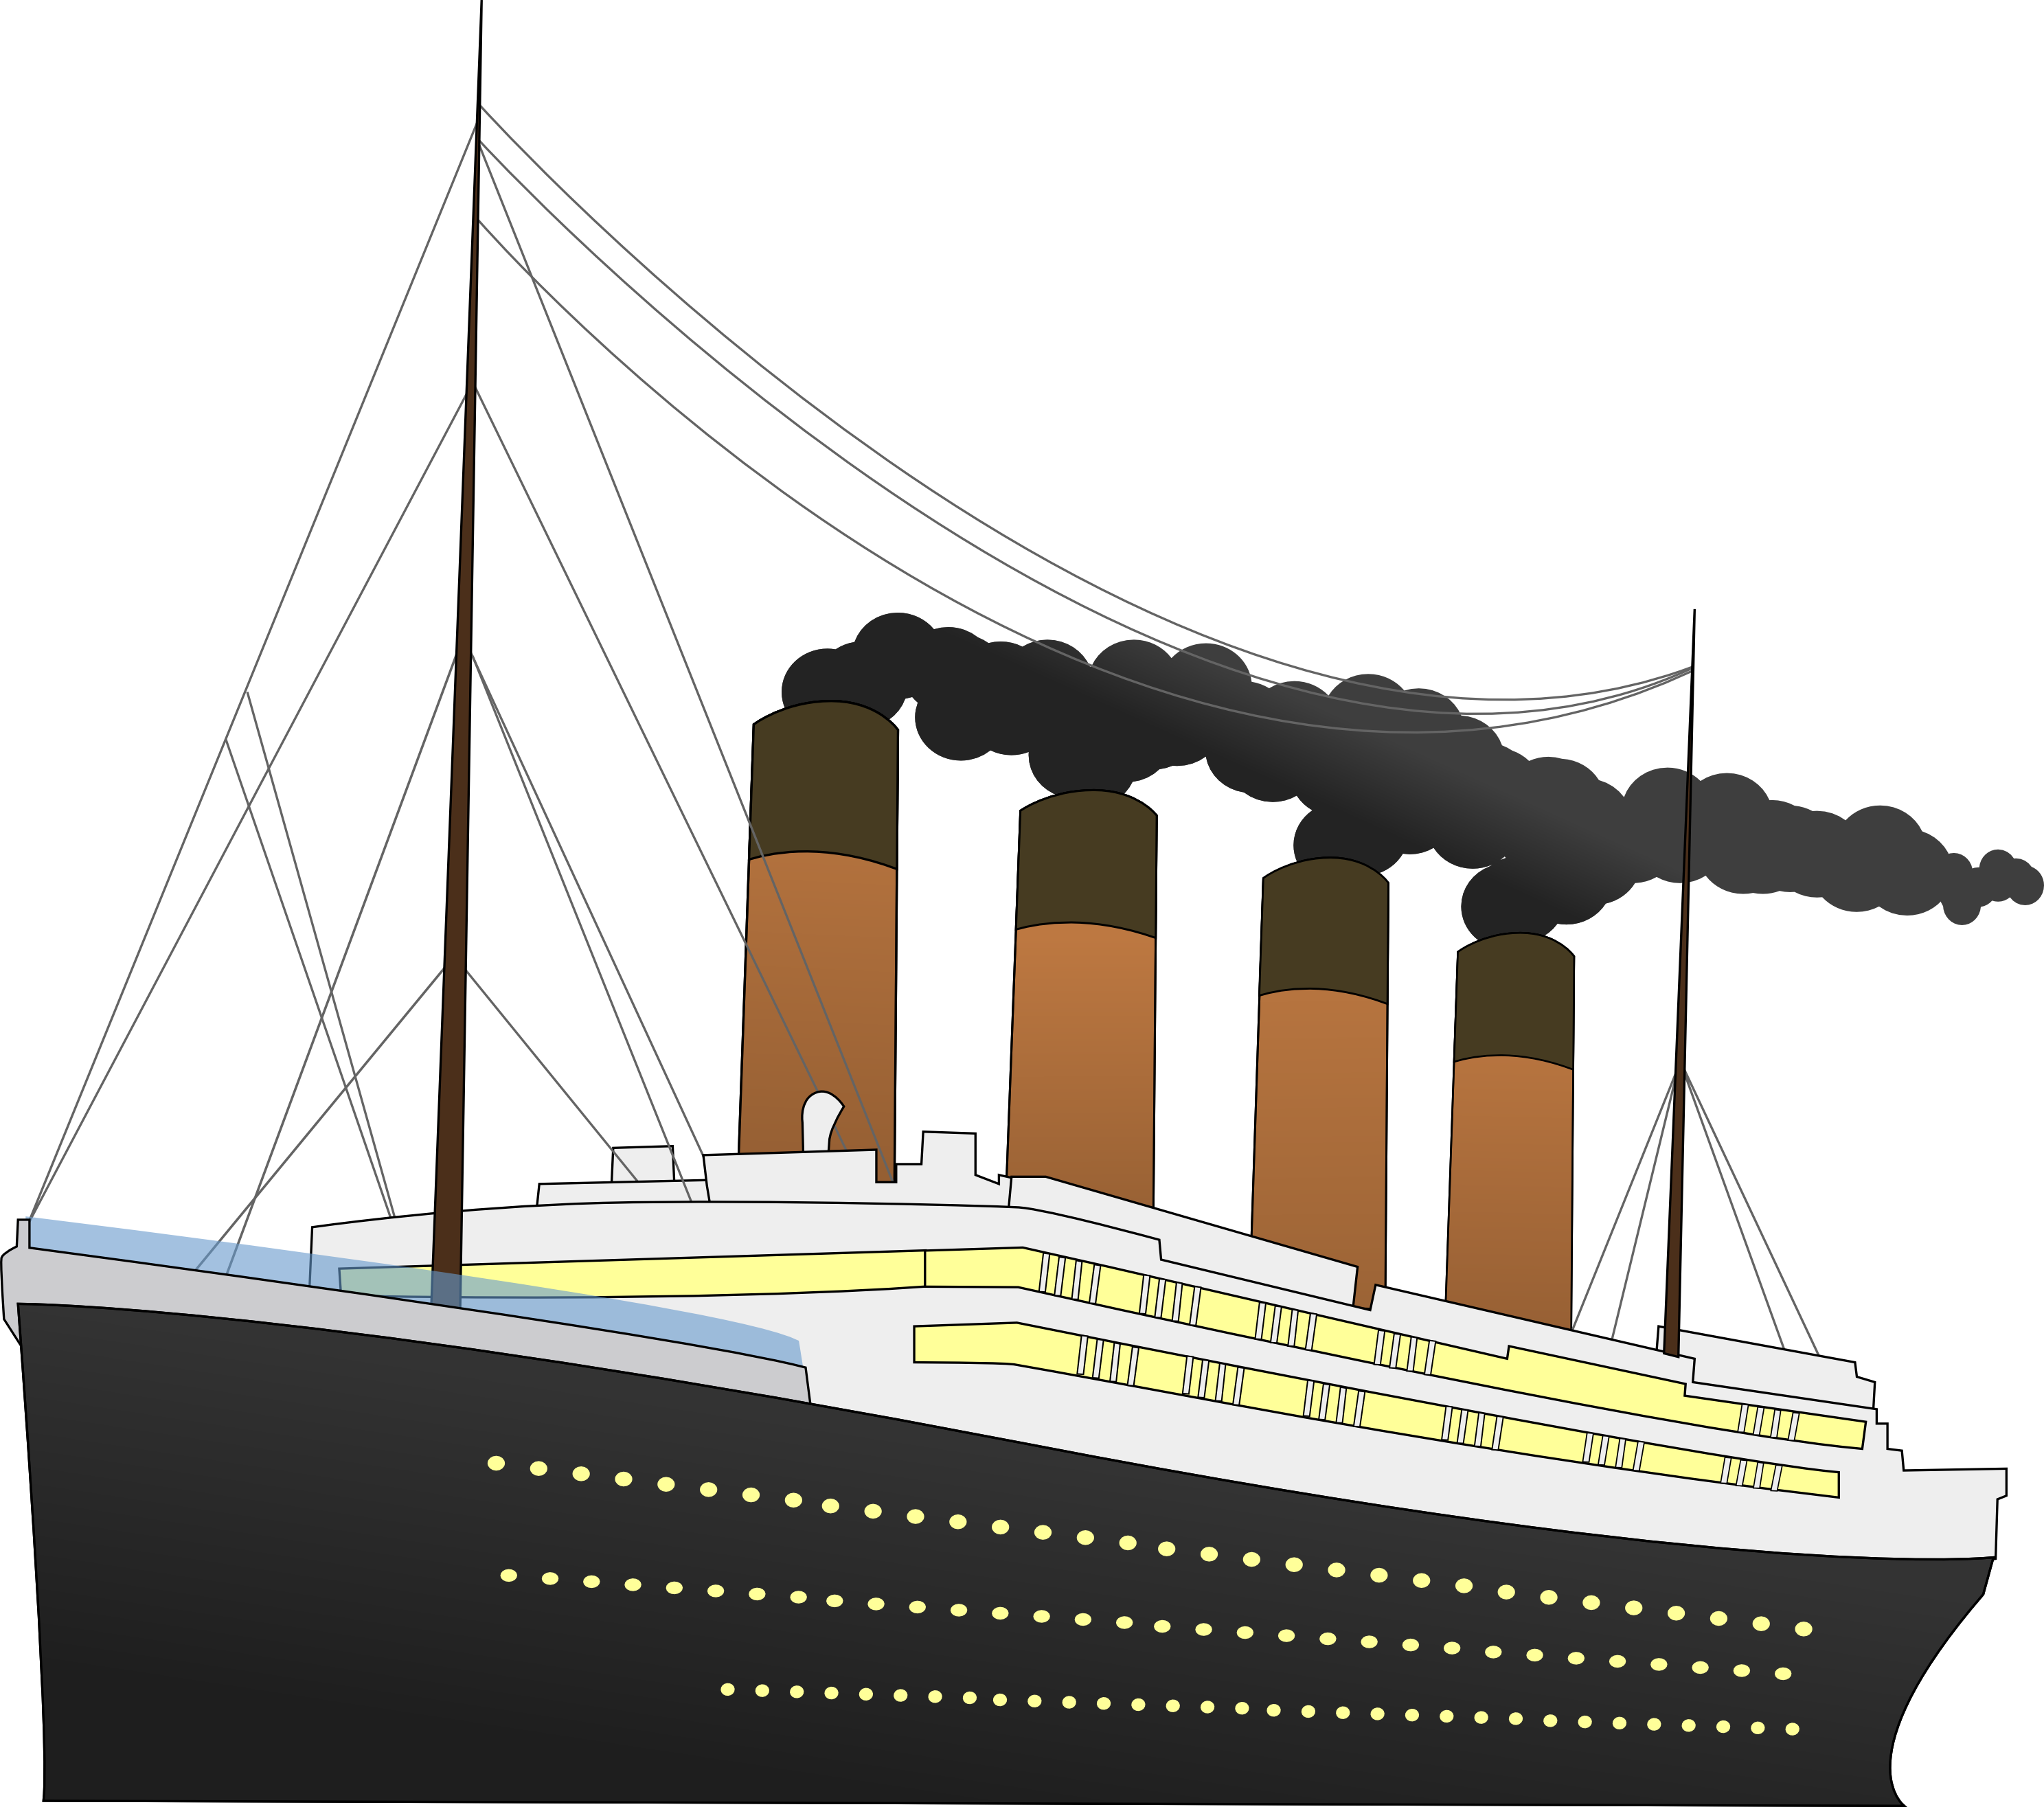 Ship clip art vector ship graphics image 2 clipartix 2